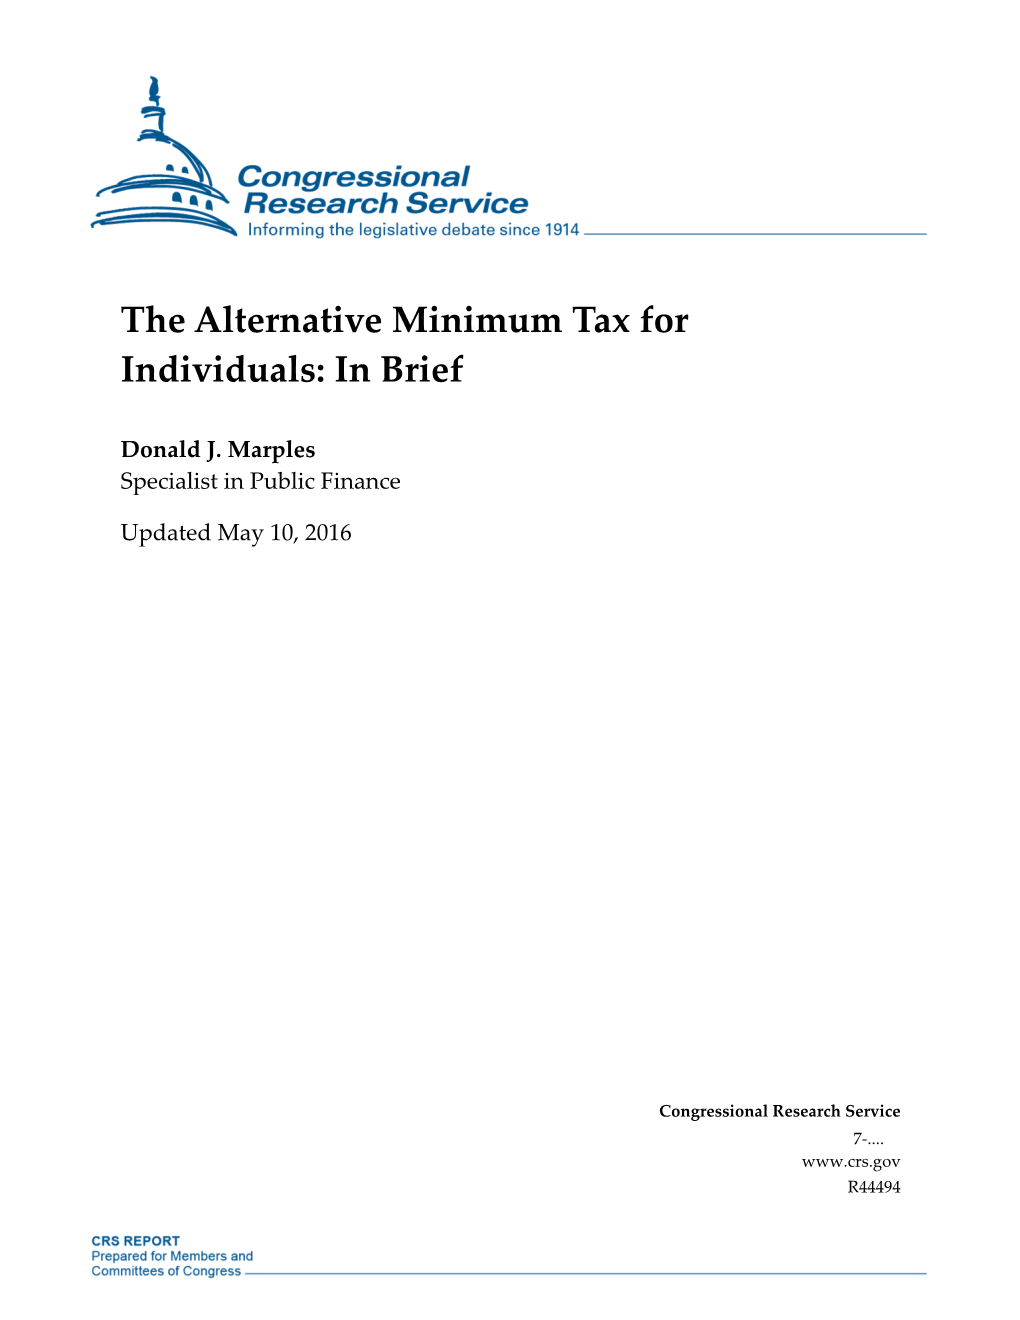 The Alternative Minimum Tax for Individuals: in Brief